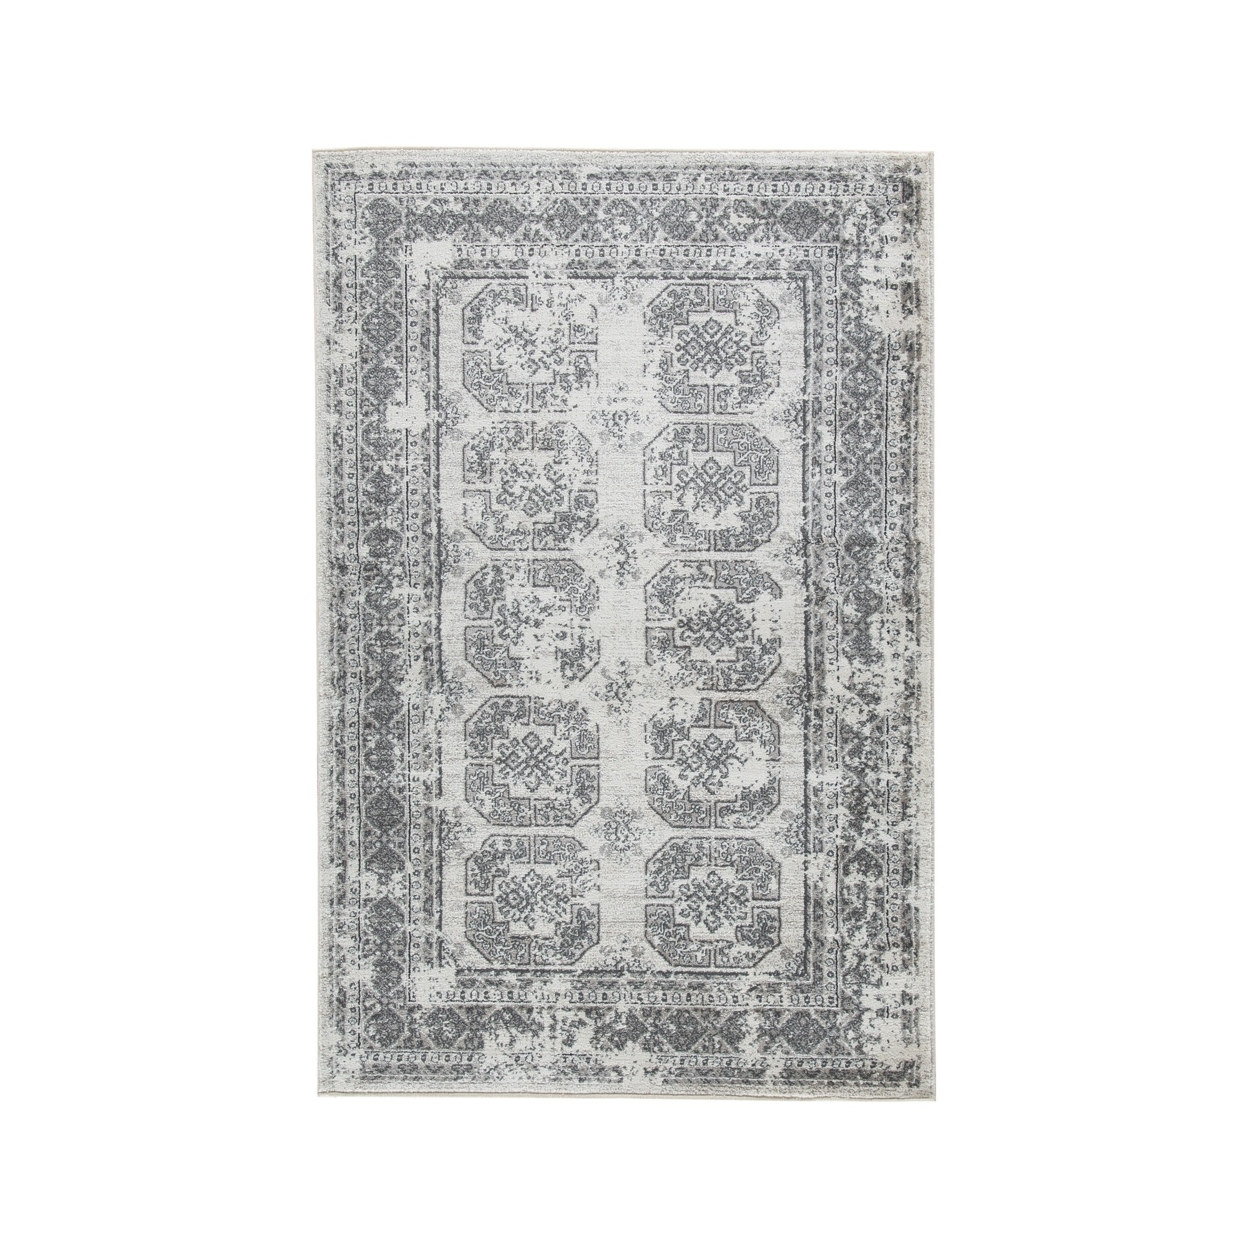 Machine Woven Fabric Rug With Erased Motif Pattern, Medium, Gray- Saltoro Sherpi